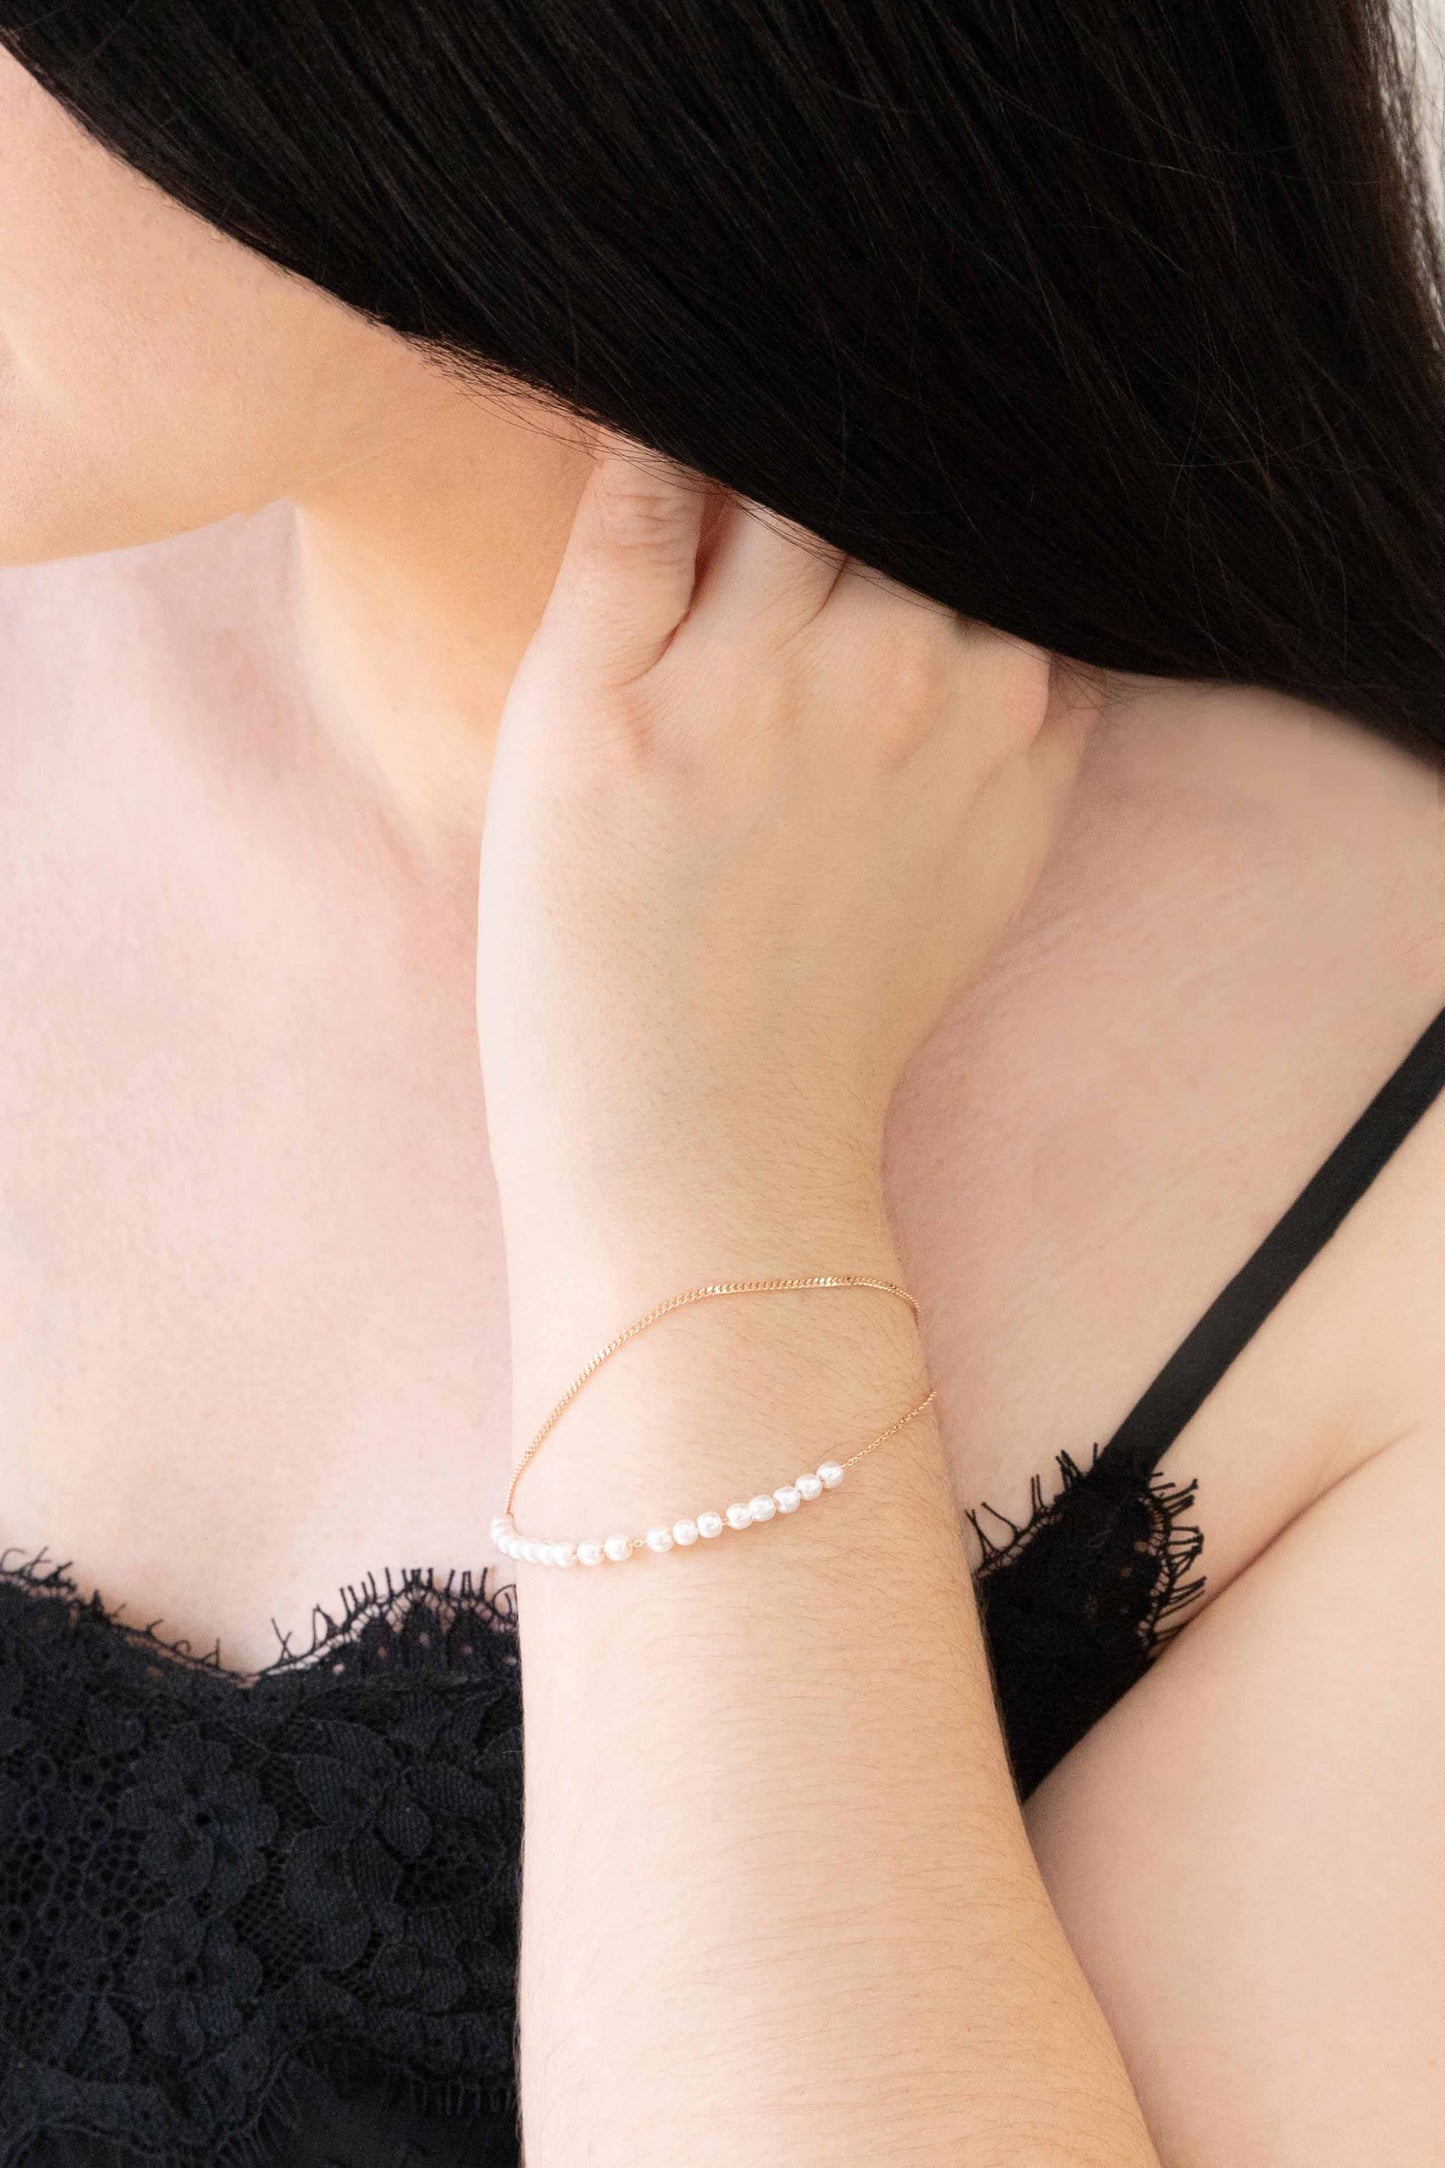 Pearlfect Layered Bracelet | Rose Gold (14K)